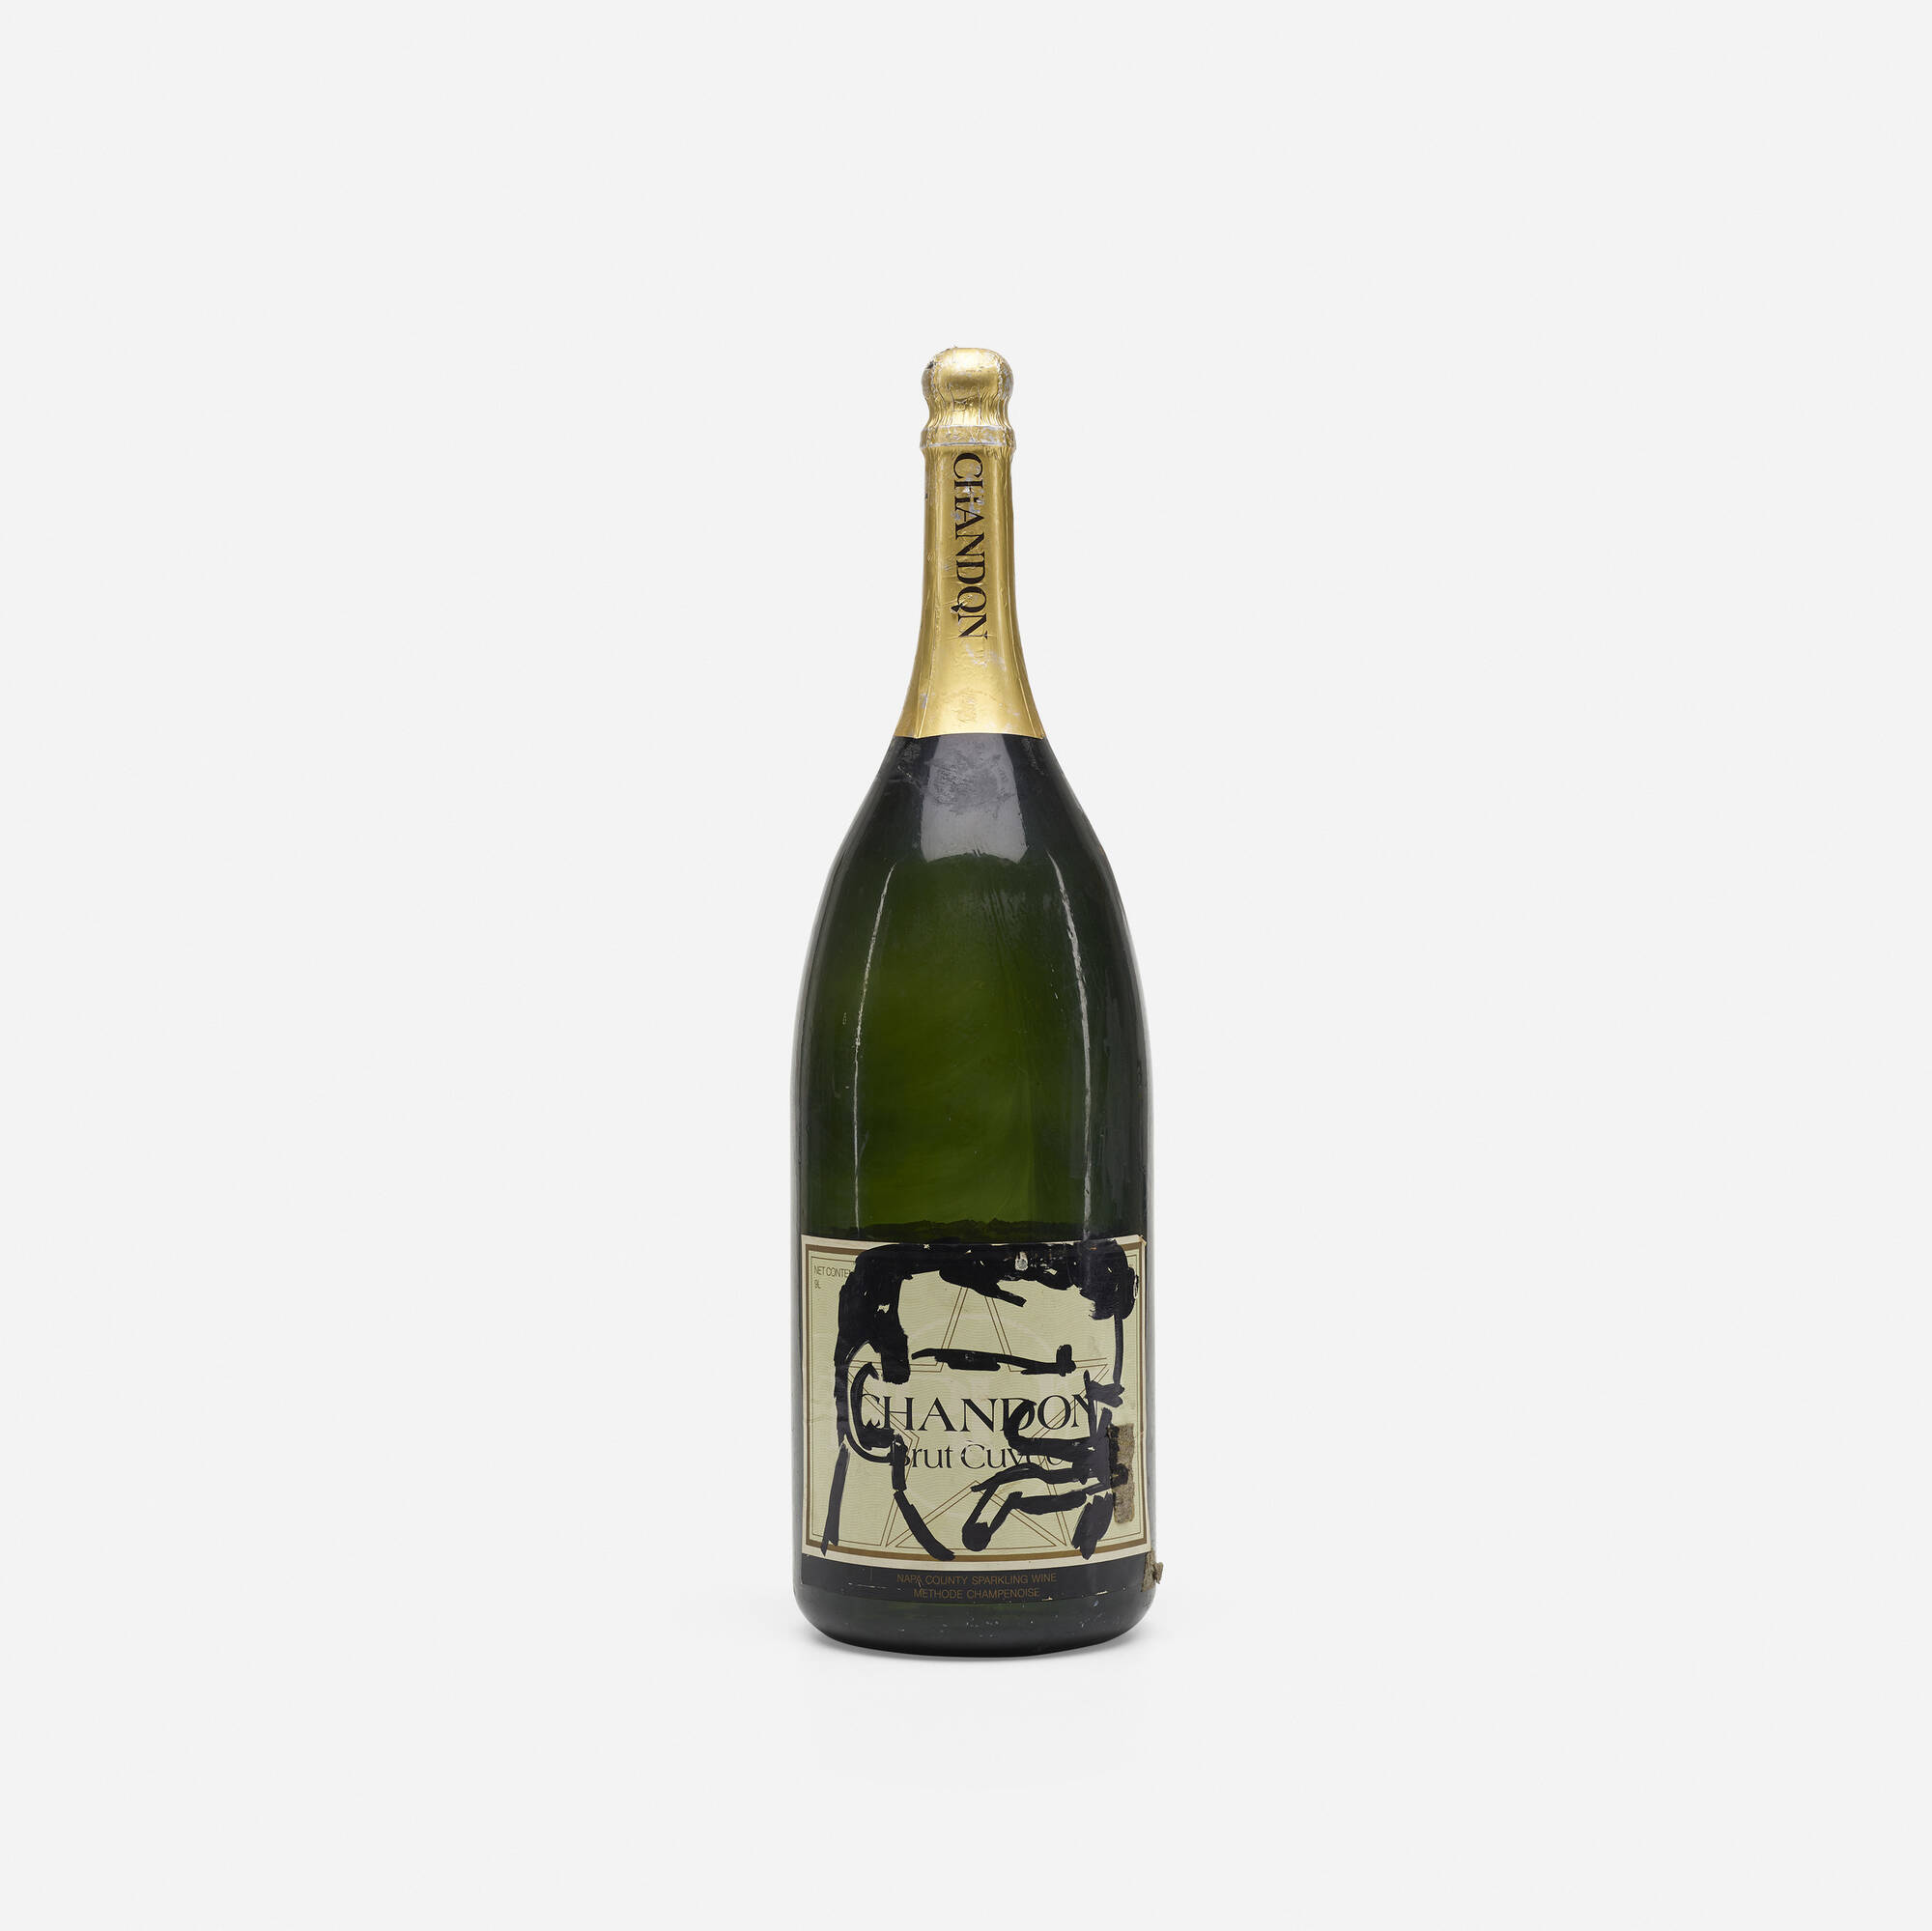 Robert paul champagne